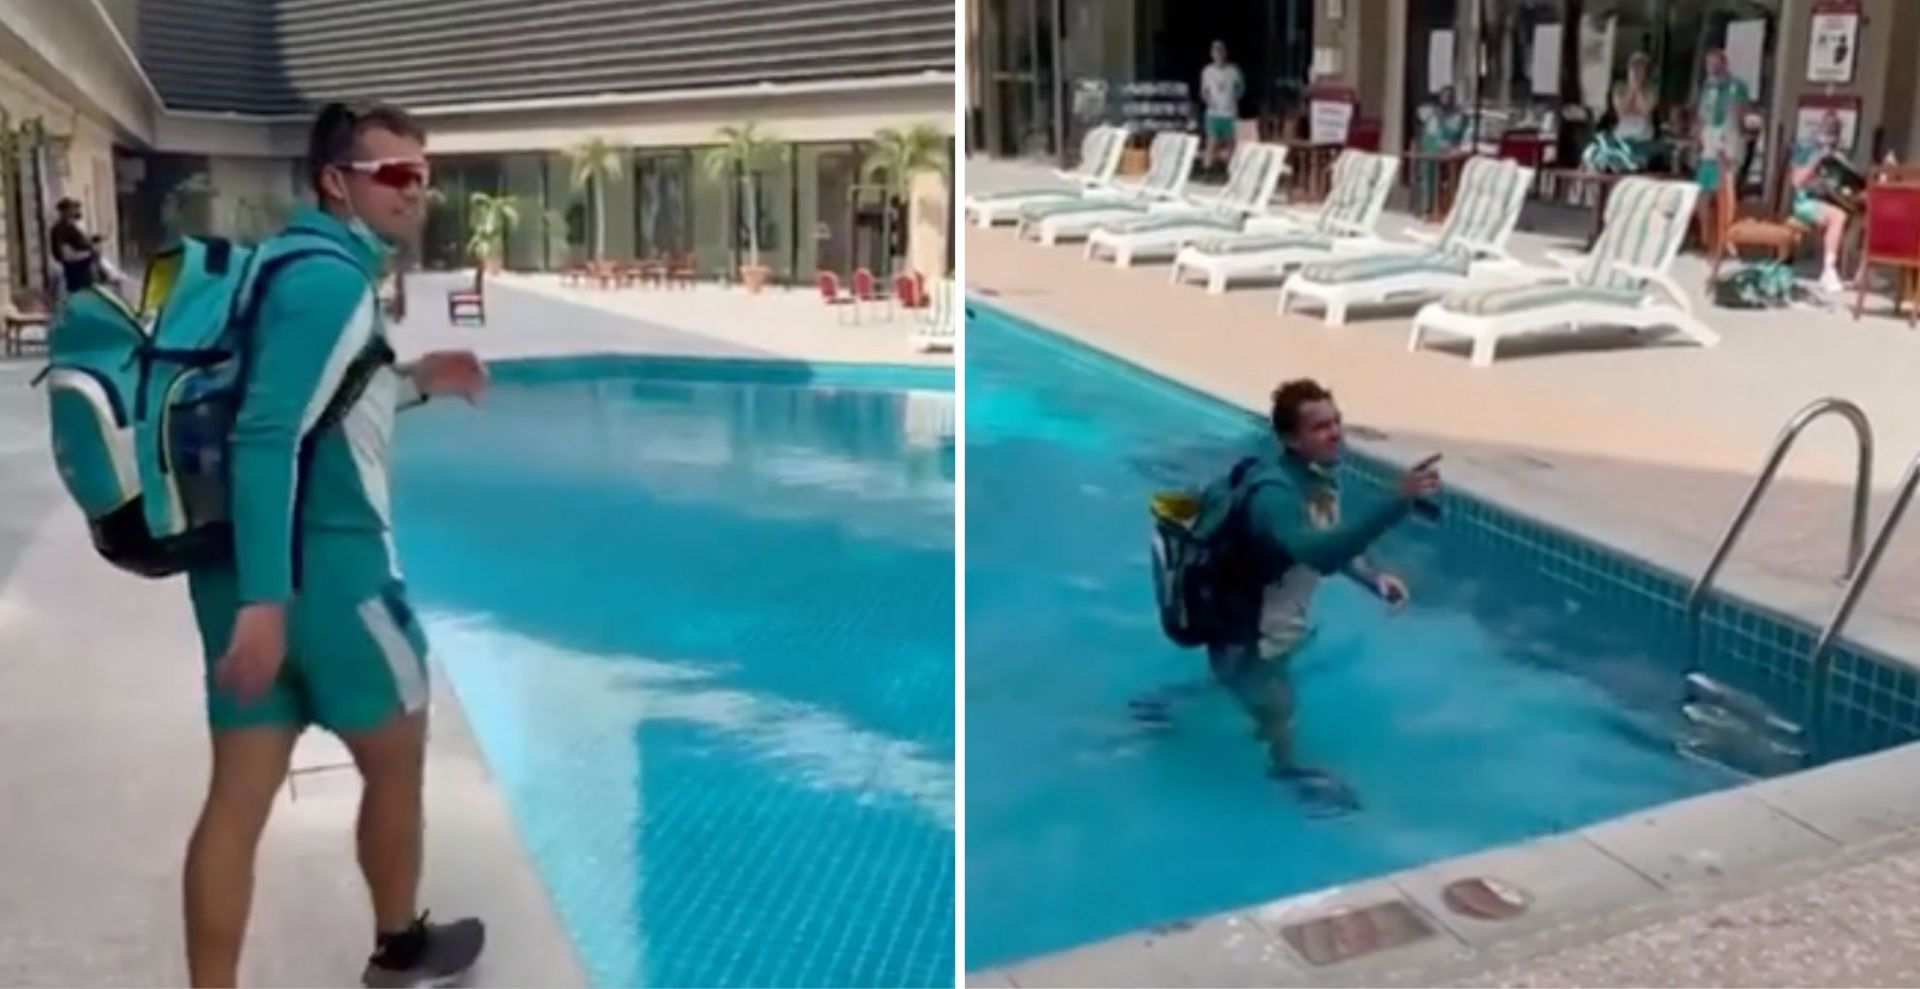 Alex Carey accidentally falls into the pool (Credit: Instagram/Pat Cummins)